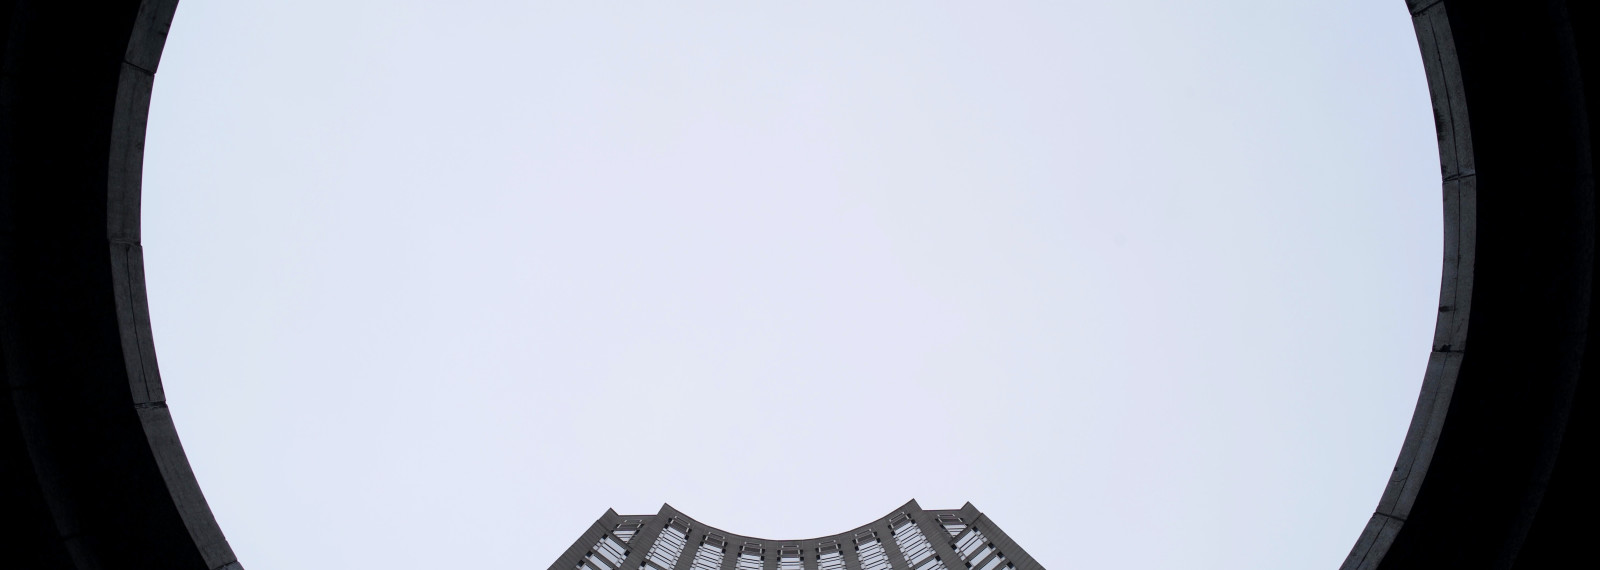 Image looking up towards a tall corporate tower through a circular building